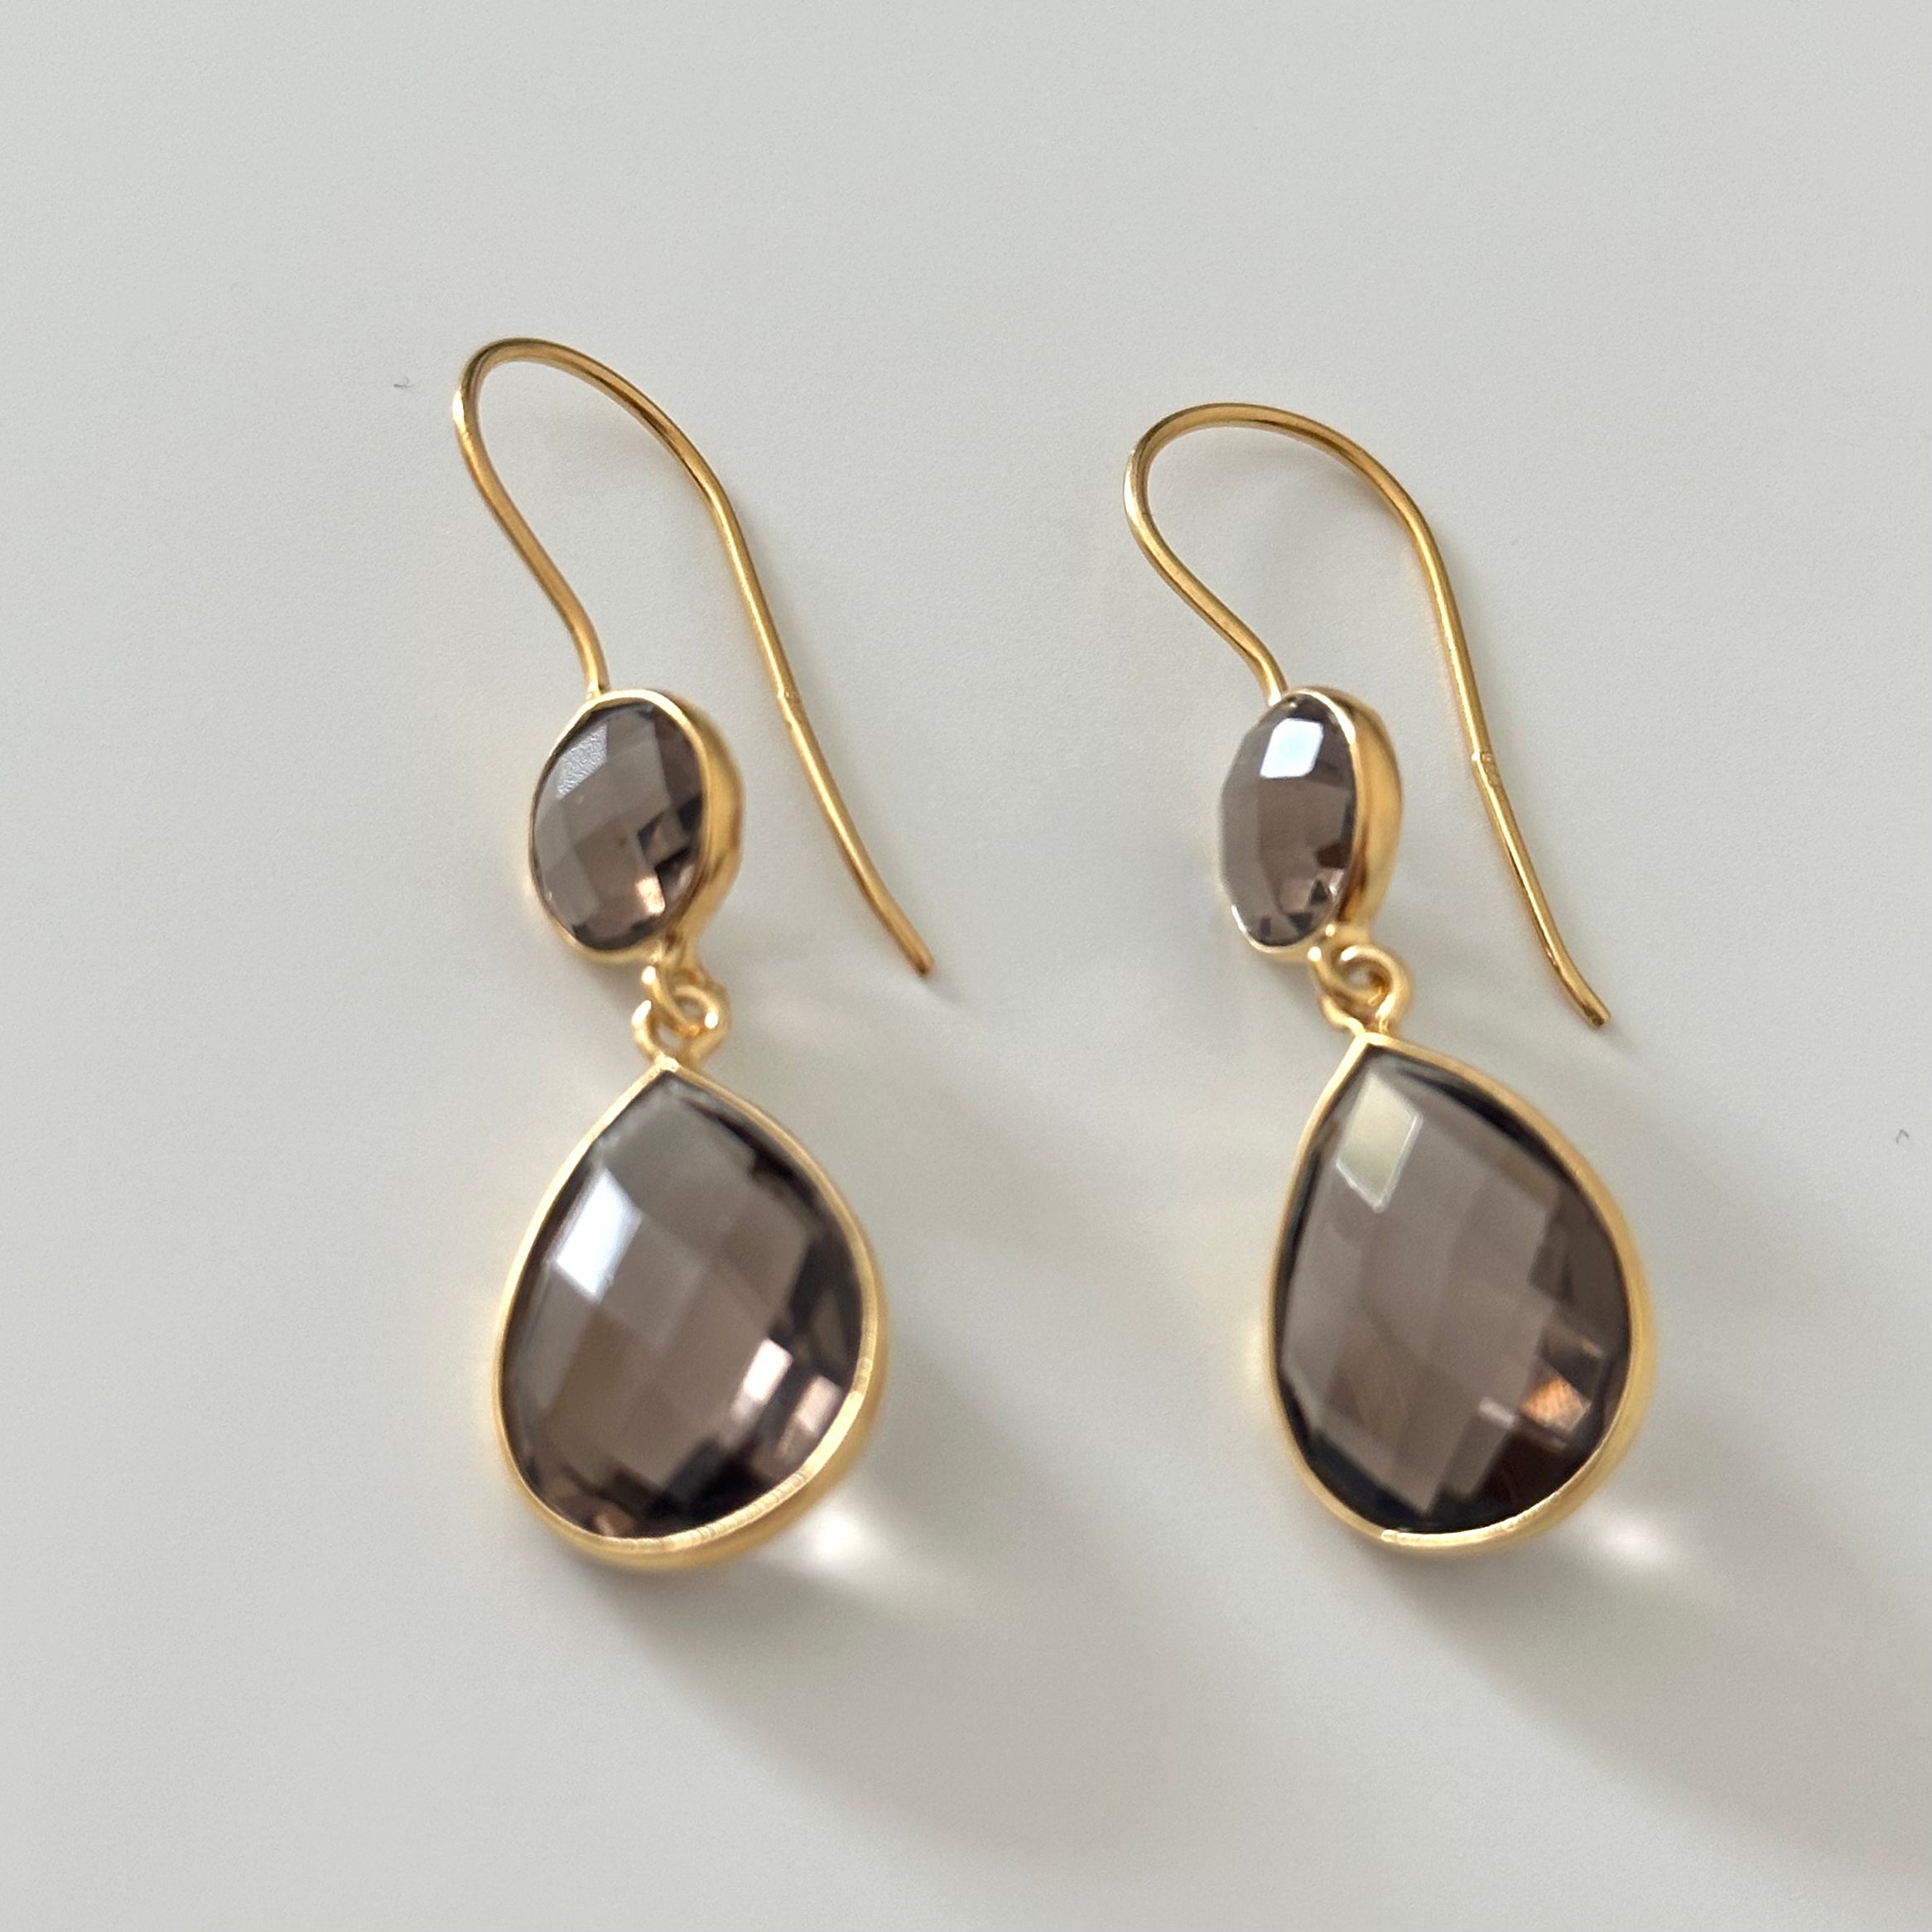 Smoky Quartz Gemstone Two Stone Earrings in Gold Plated Sterling Silver - Teardrop